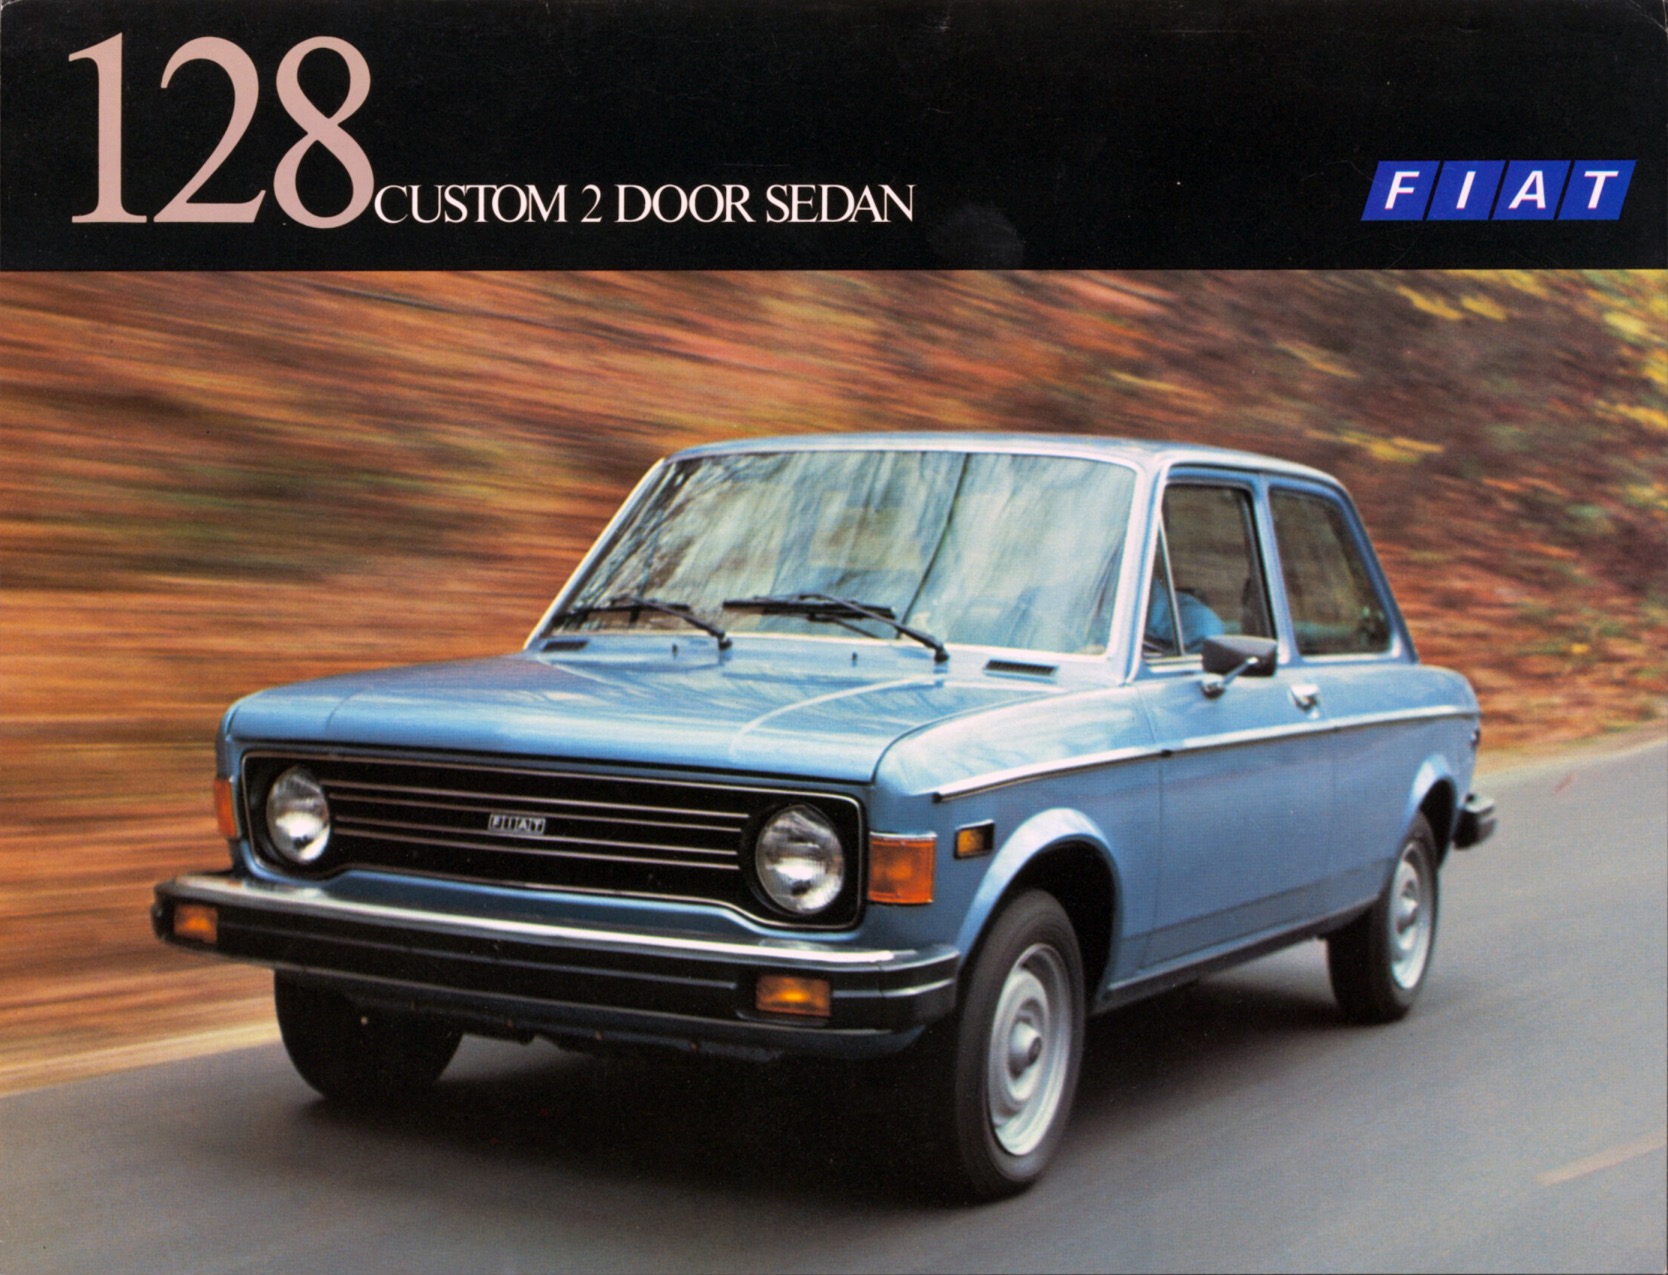 1974 Fiat 128 Custom